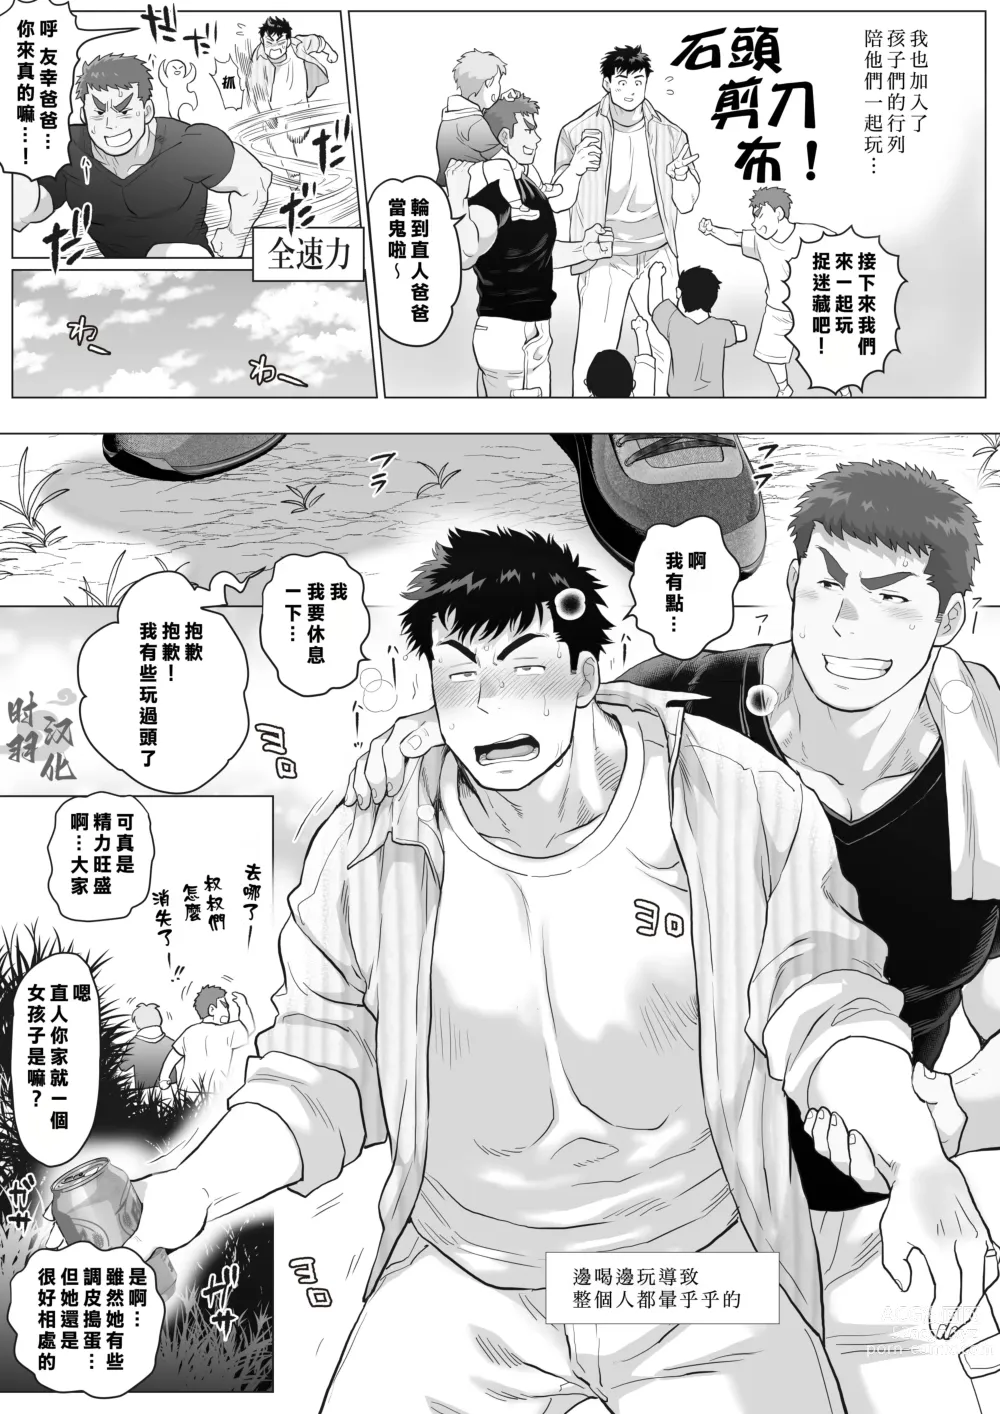 Page 7 of manga 直人爸爸与友幸爸爸 第一话